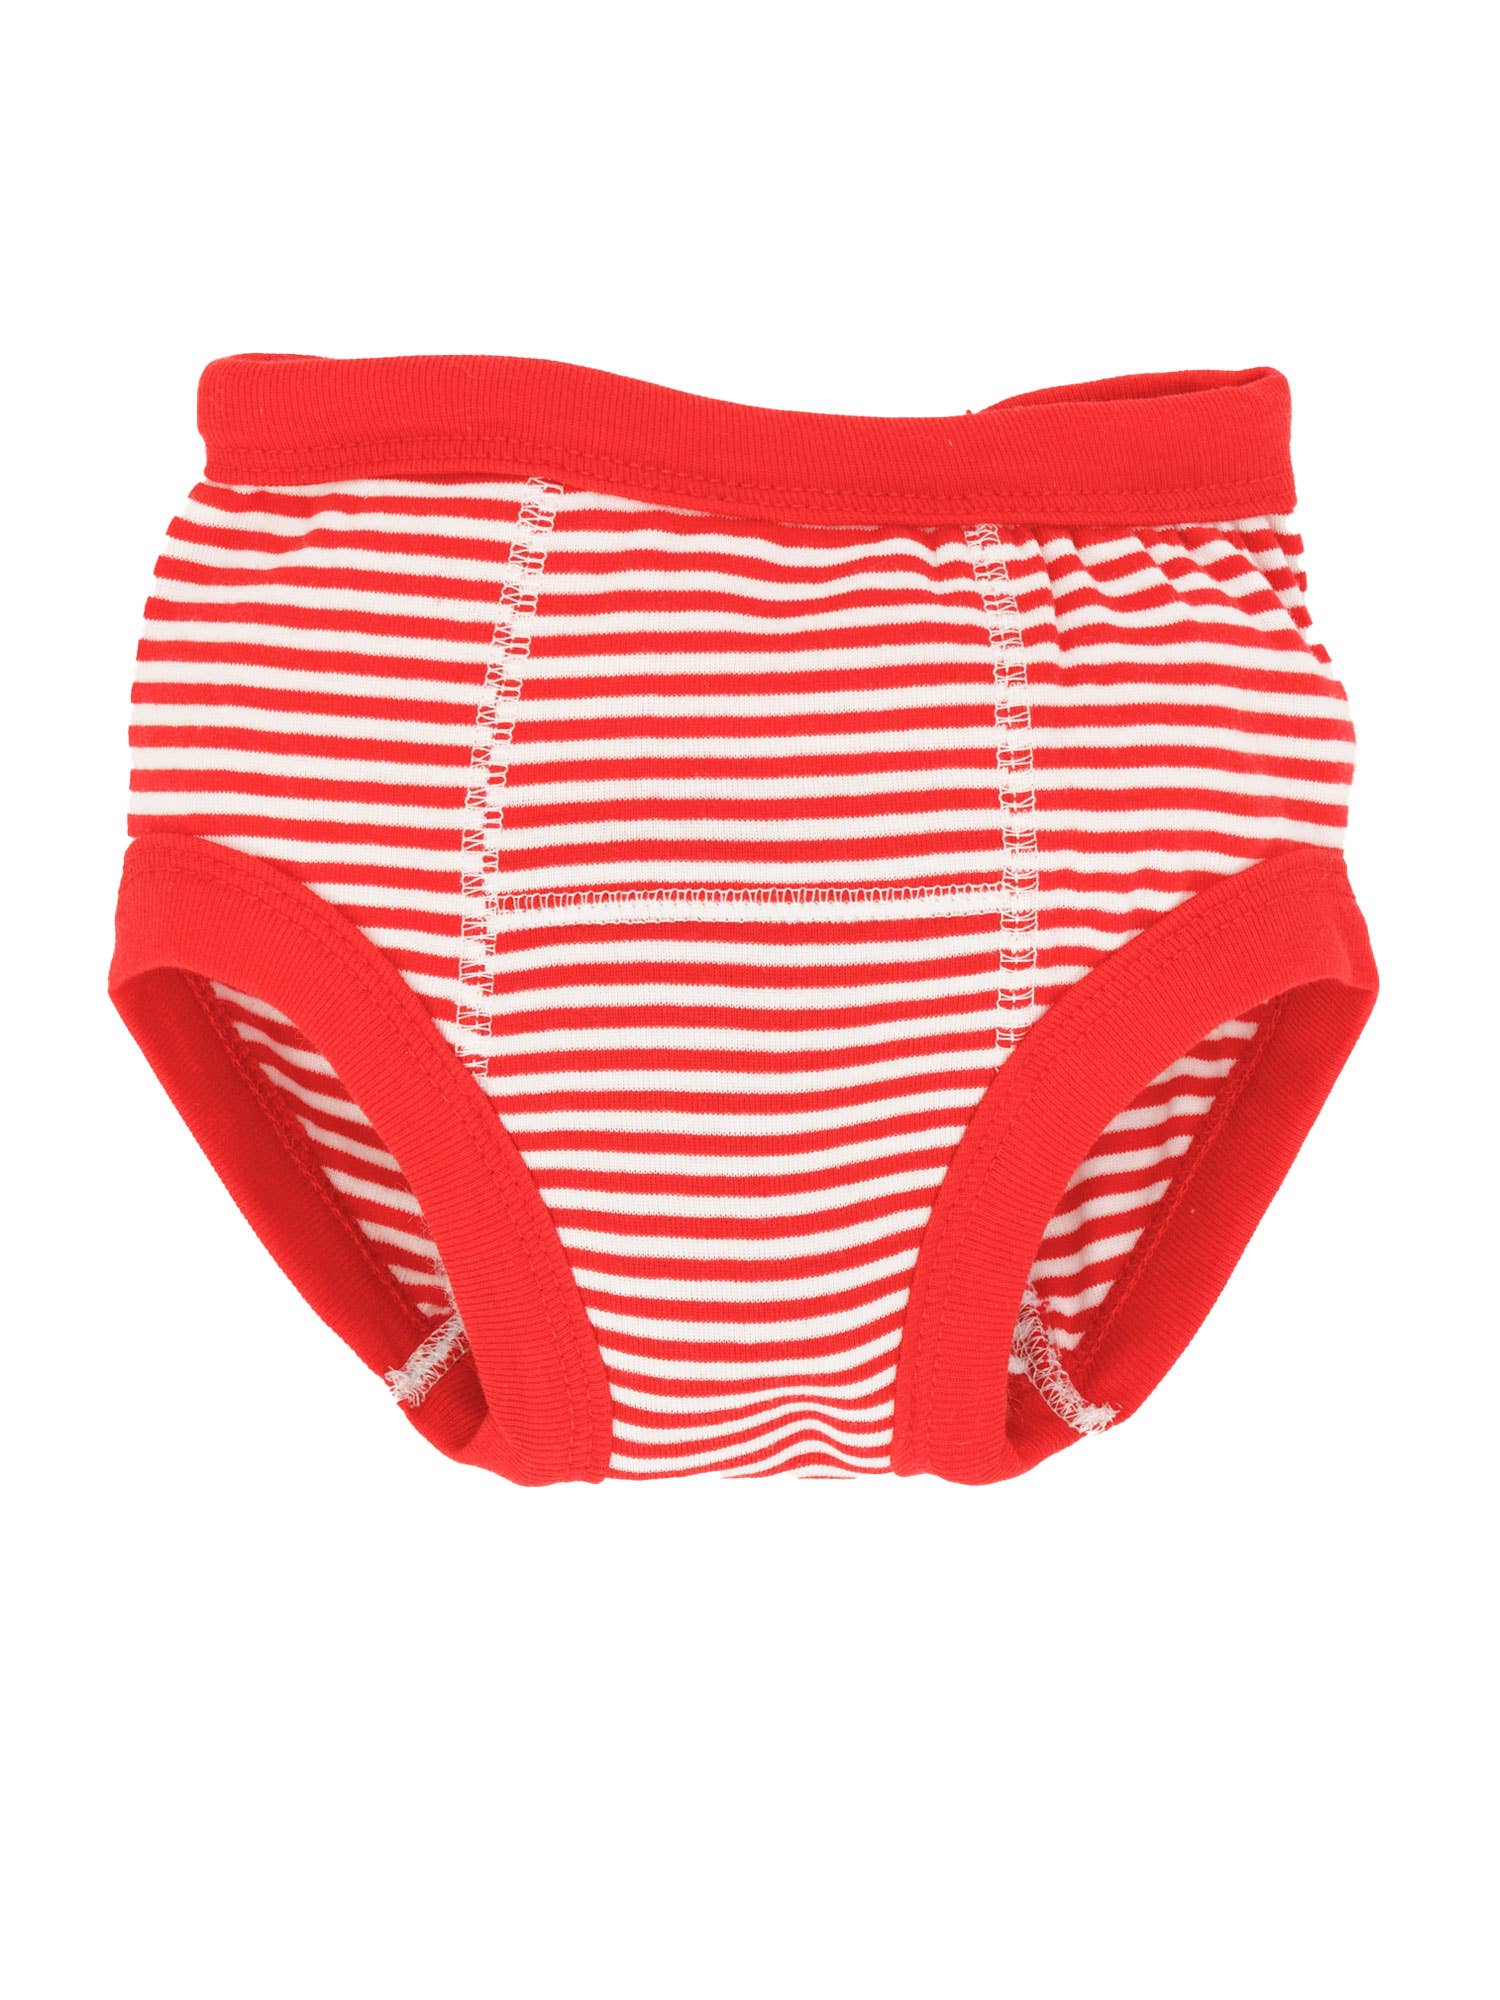 Red Stripe Potty Training Pants - Organic Boutique